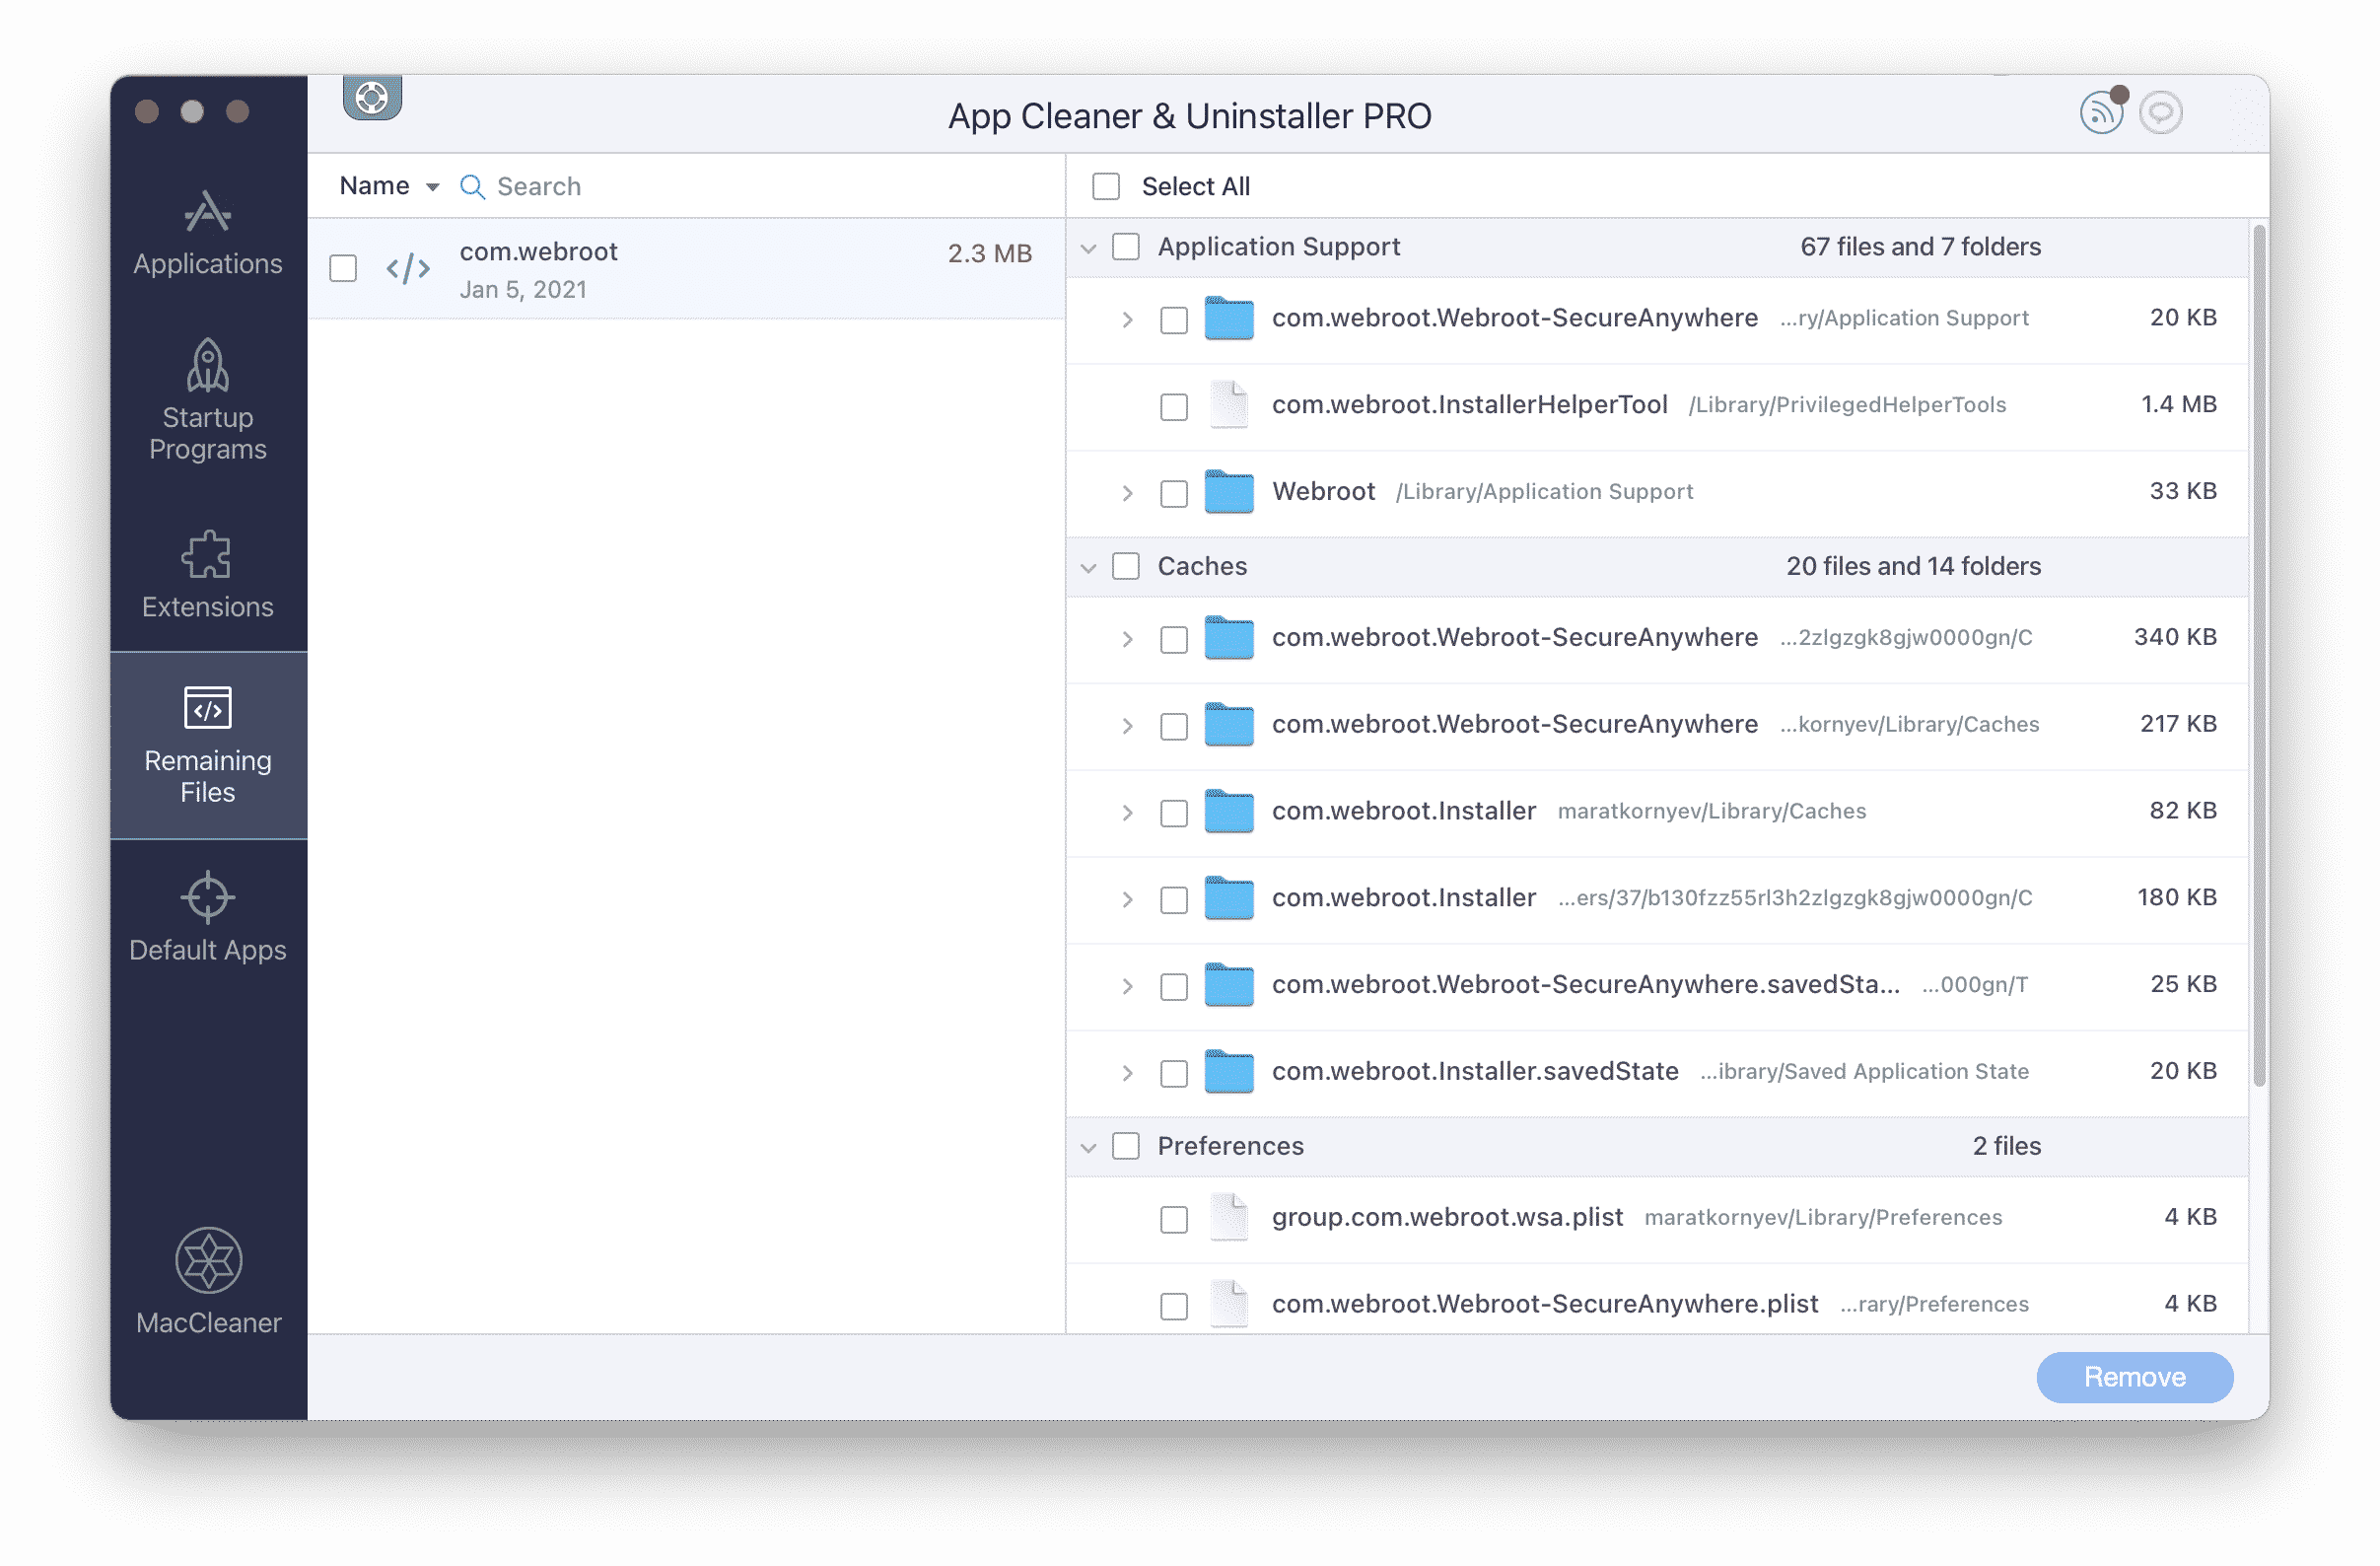 App Cleaner & Uninstaller showing Webroot remaining files